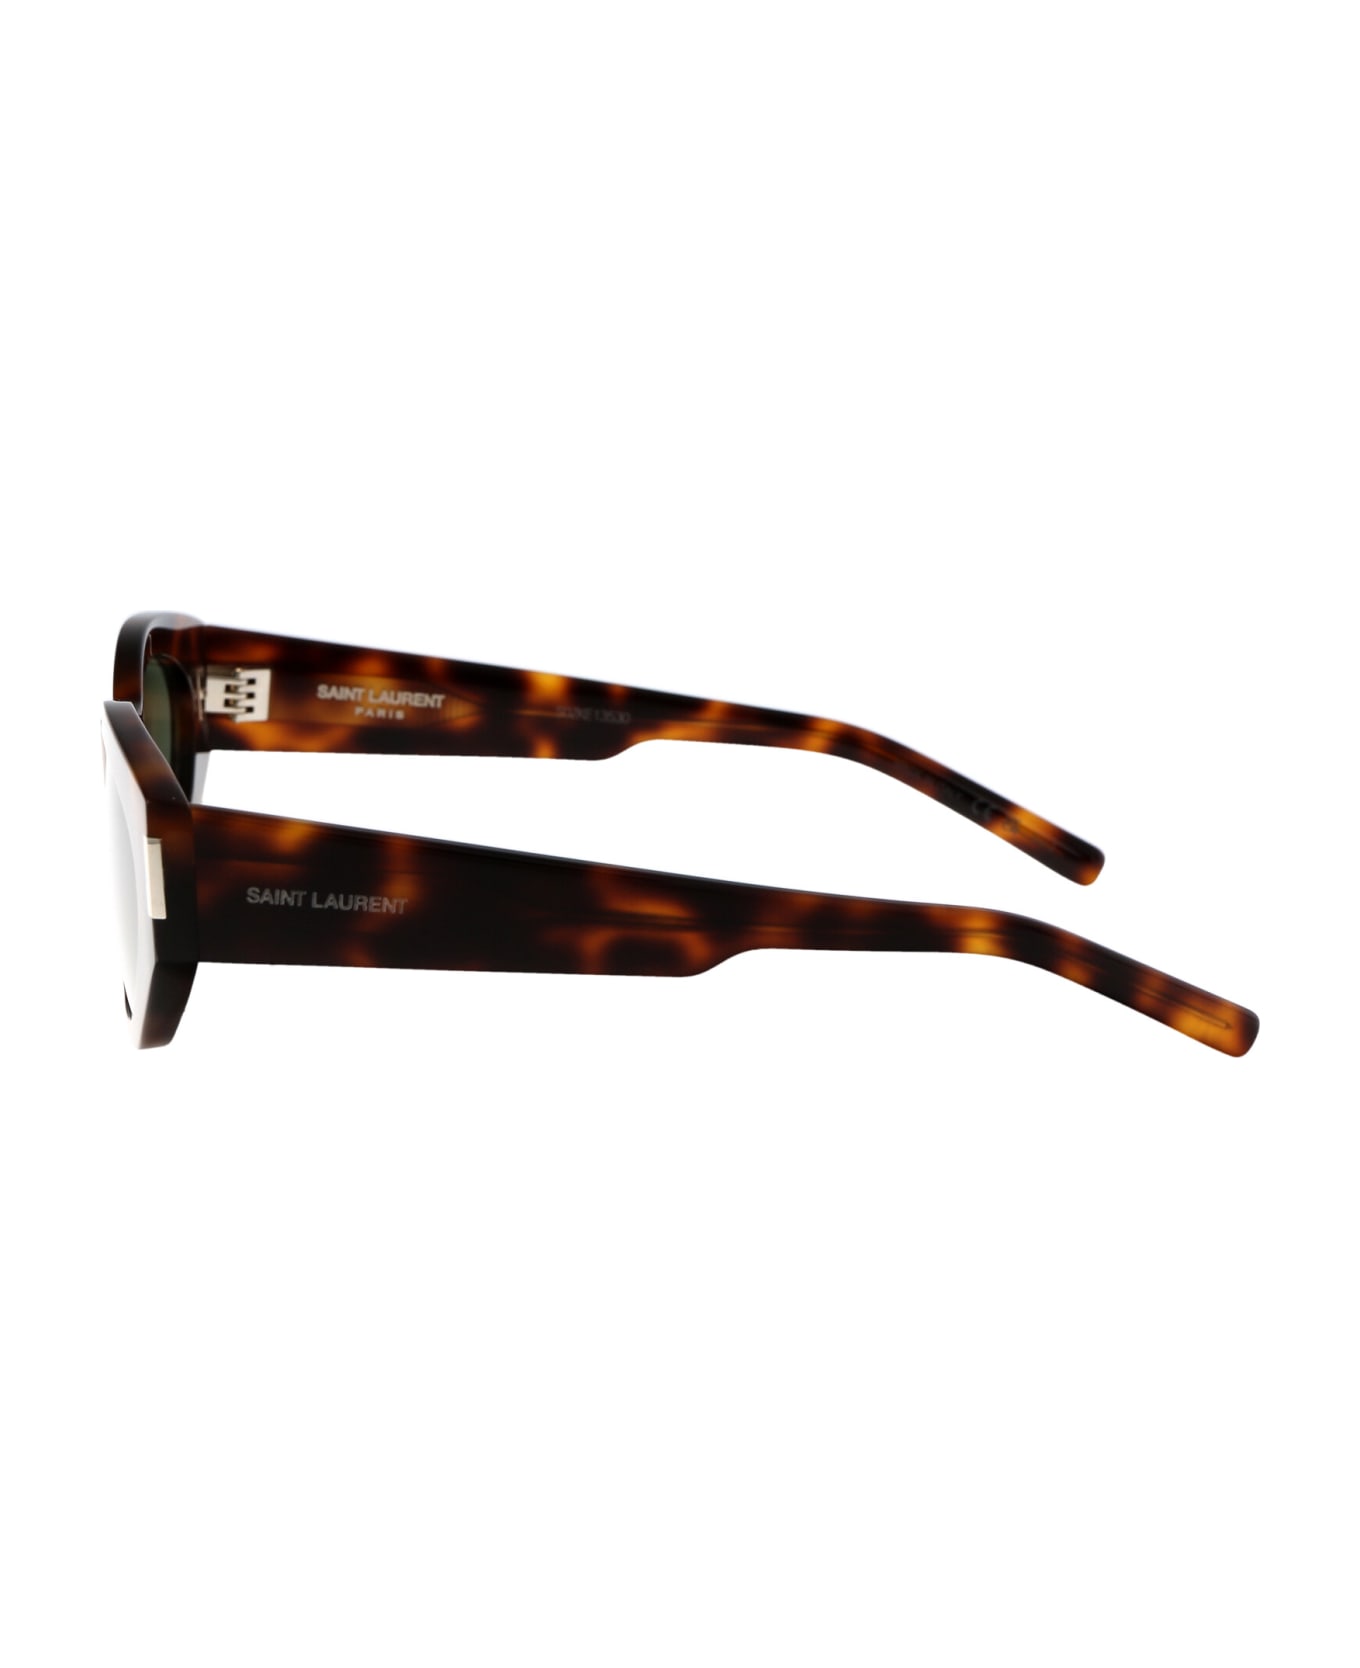 Saint Laurent Eyewear Sl 638 Sunglasses - 003 HAVANA HAVANA GREEN